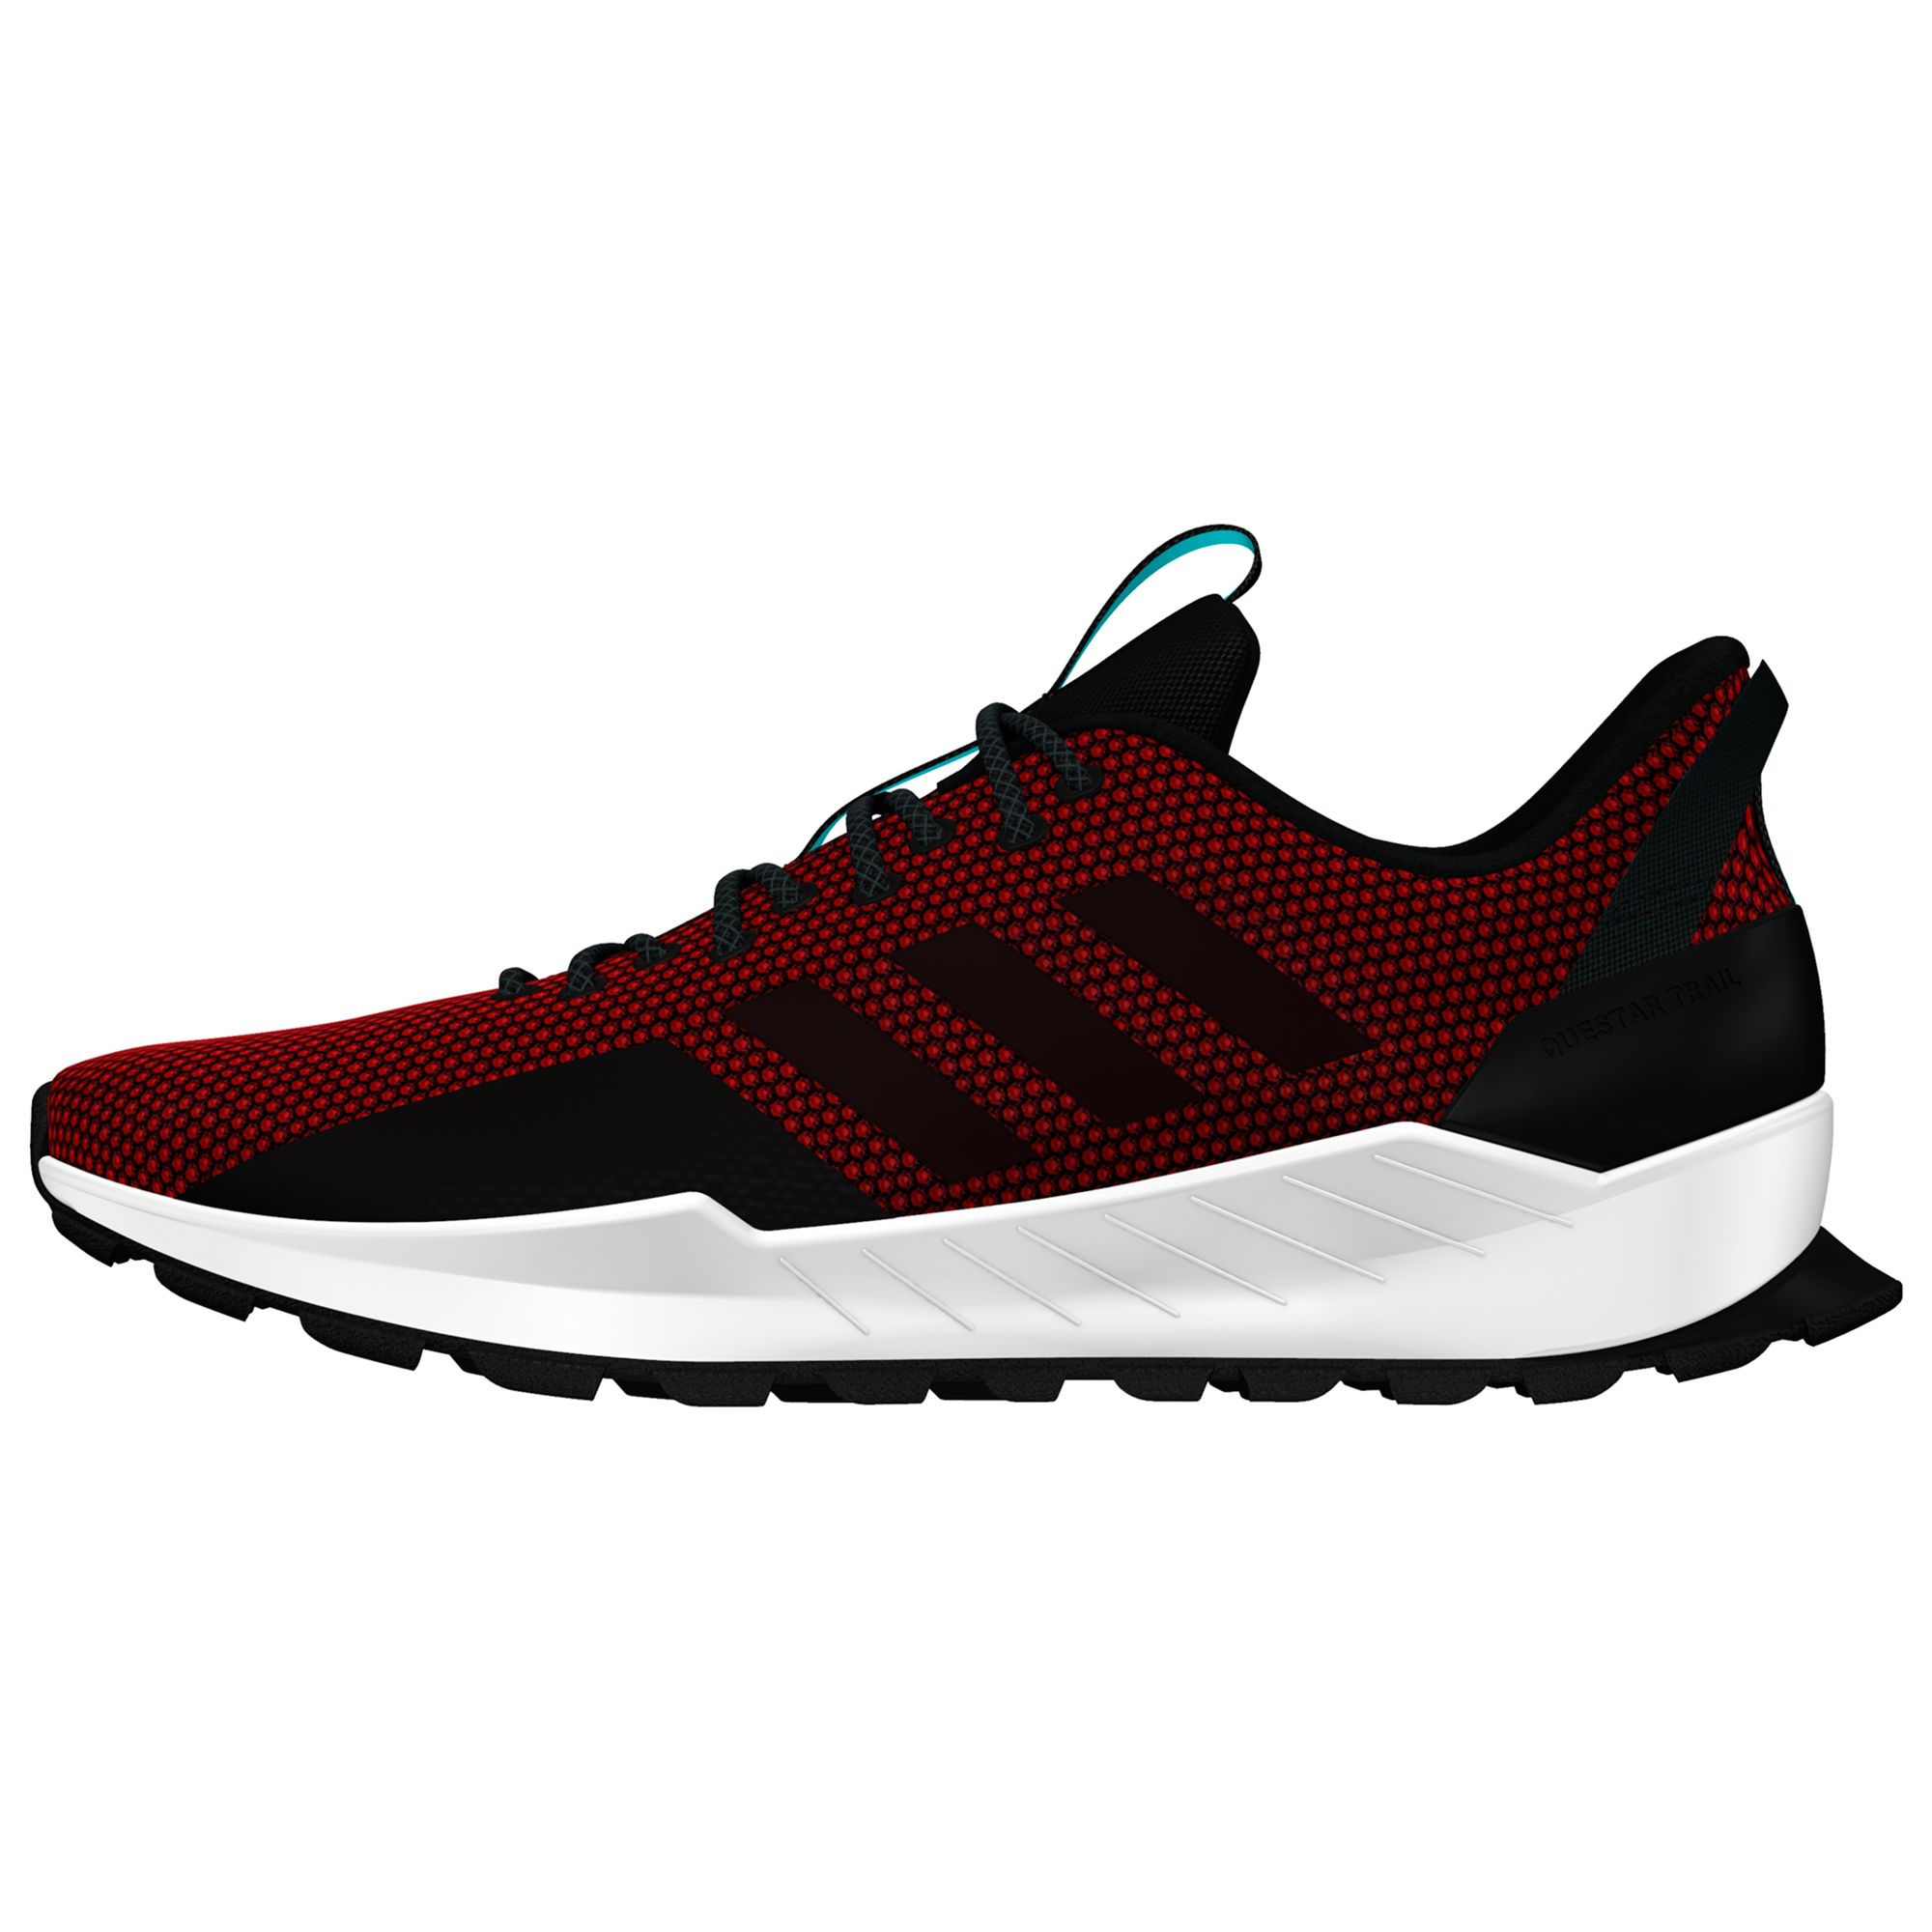 adidas questar mens trail running shoes